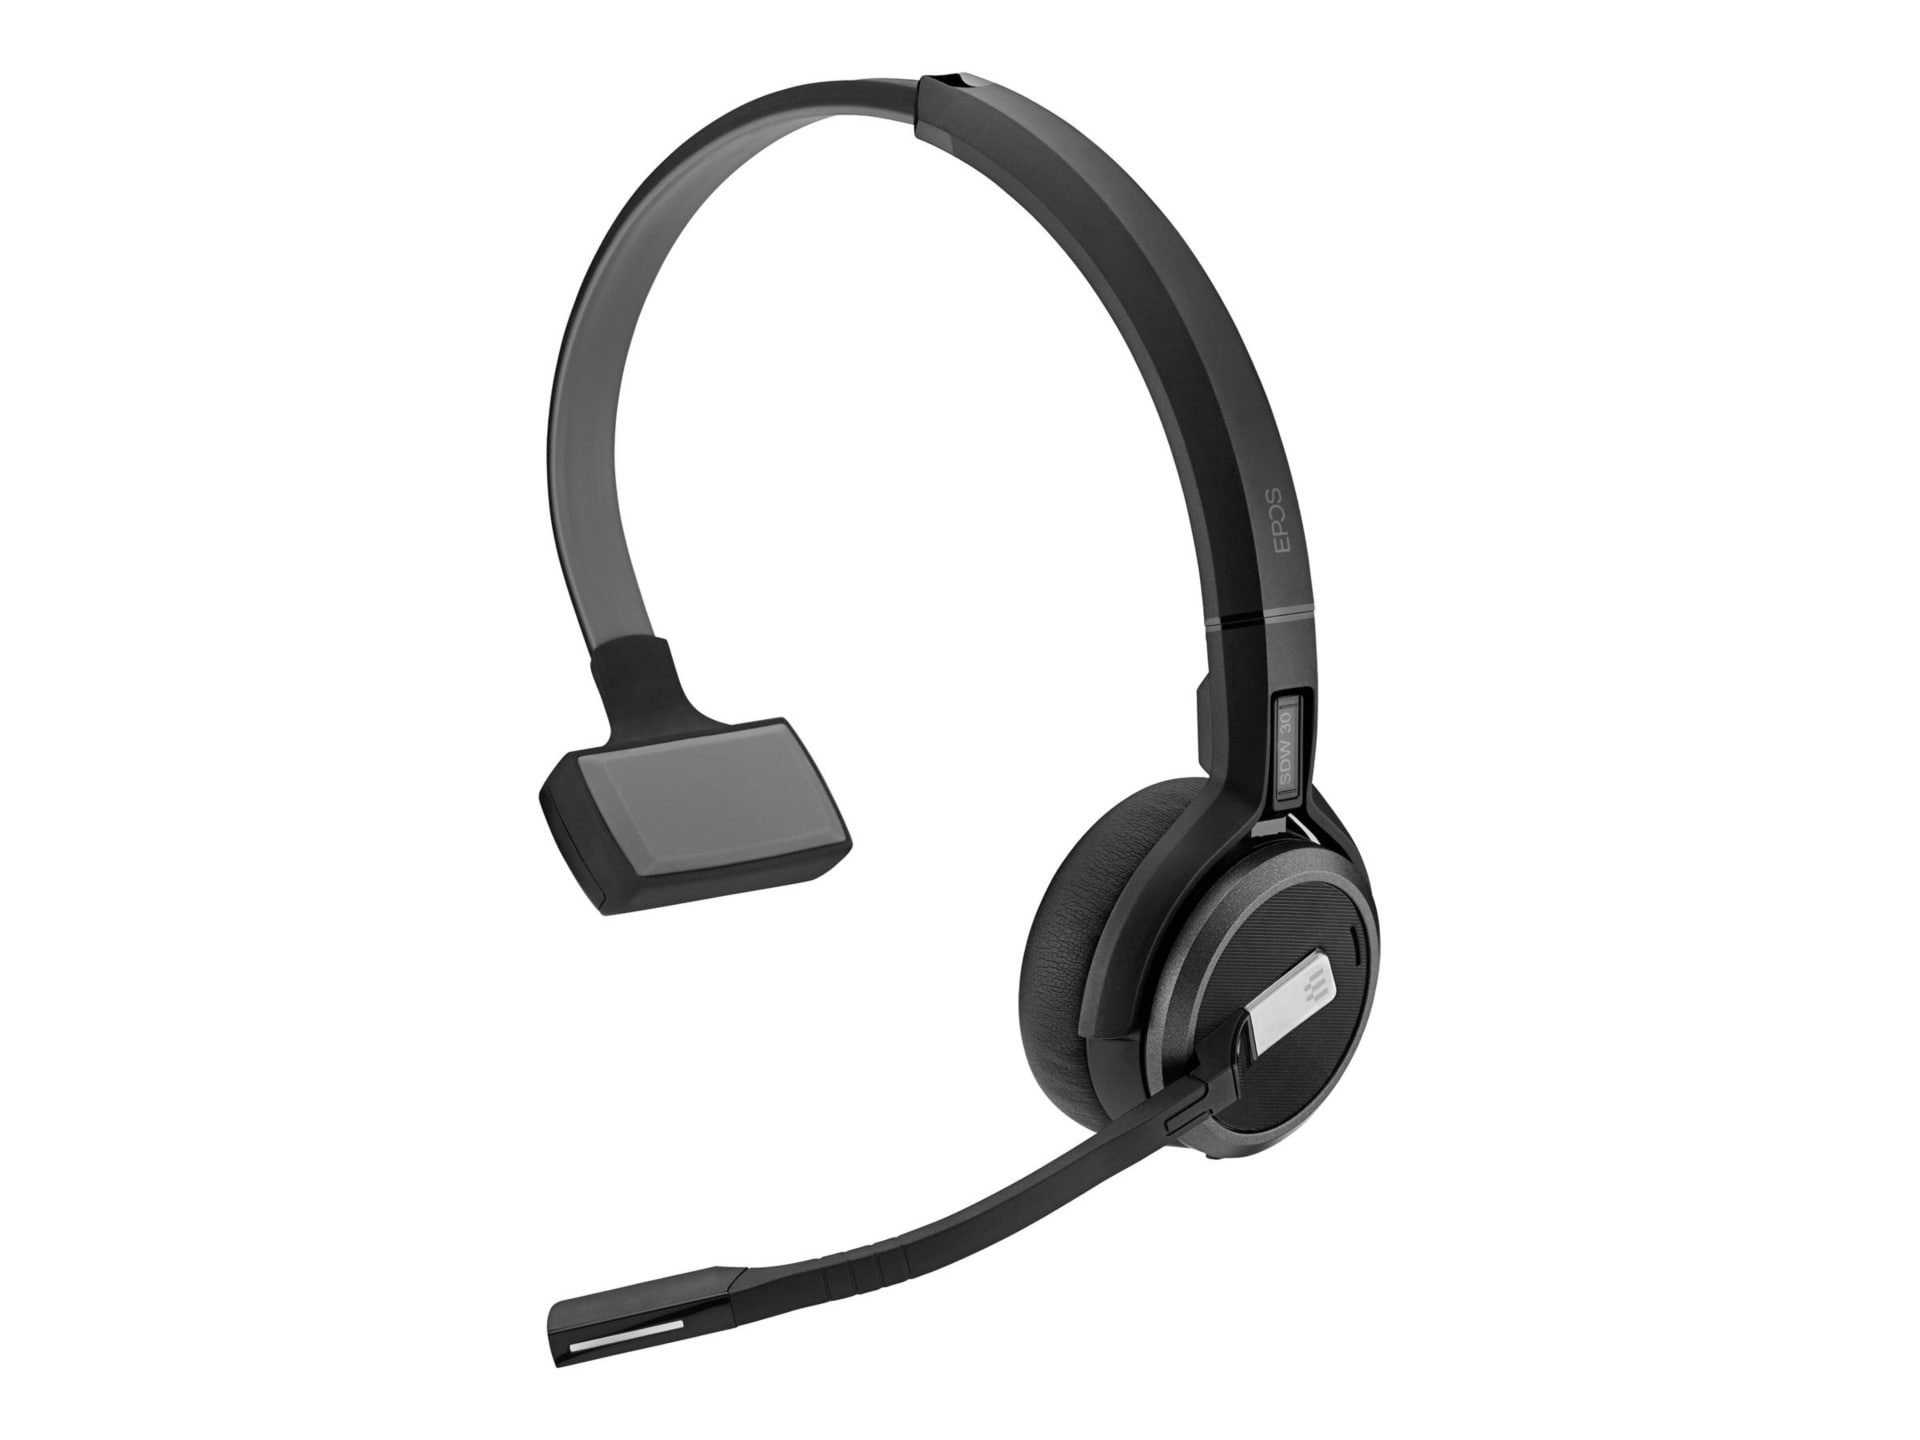 EPOS IMPACT SDW 5033 - US - wireless mono headset system - black